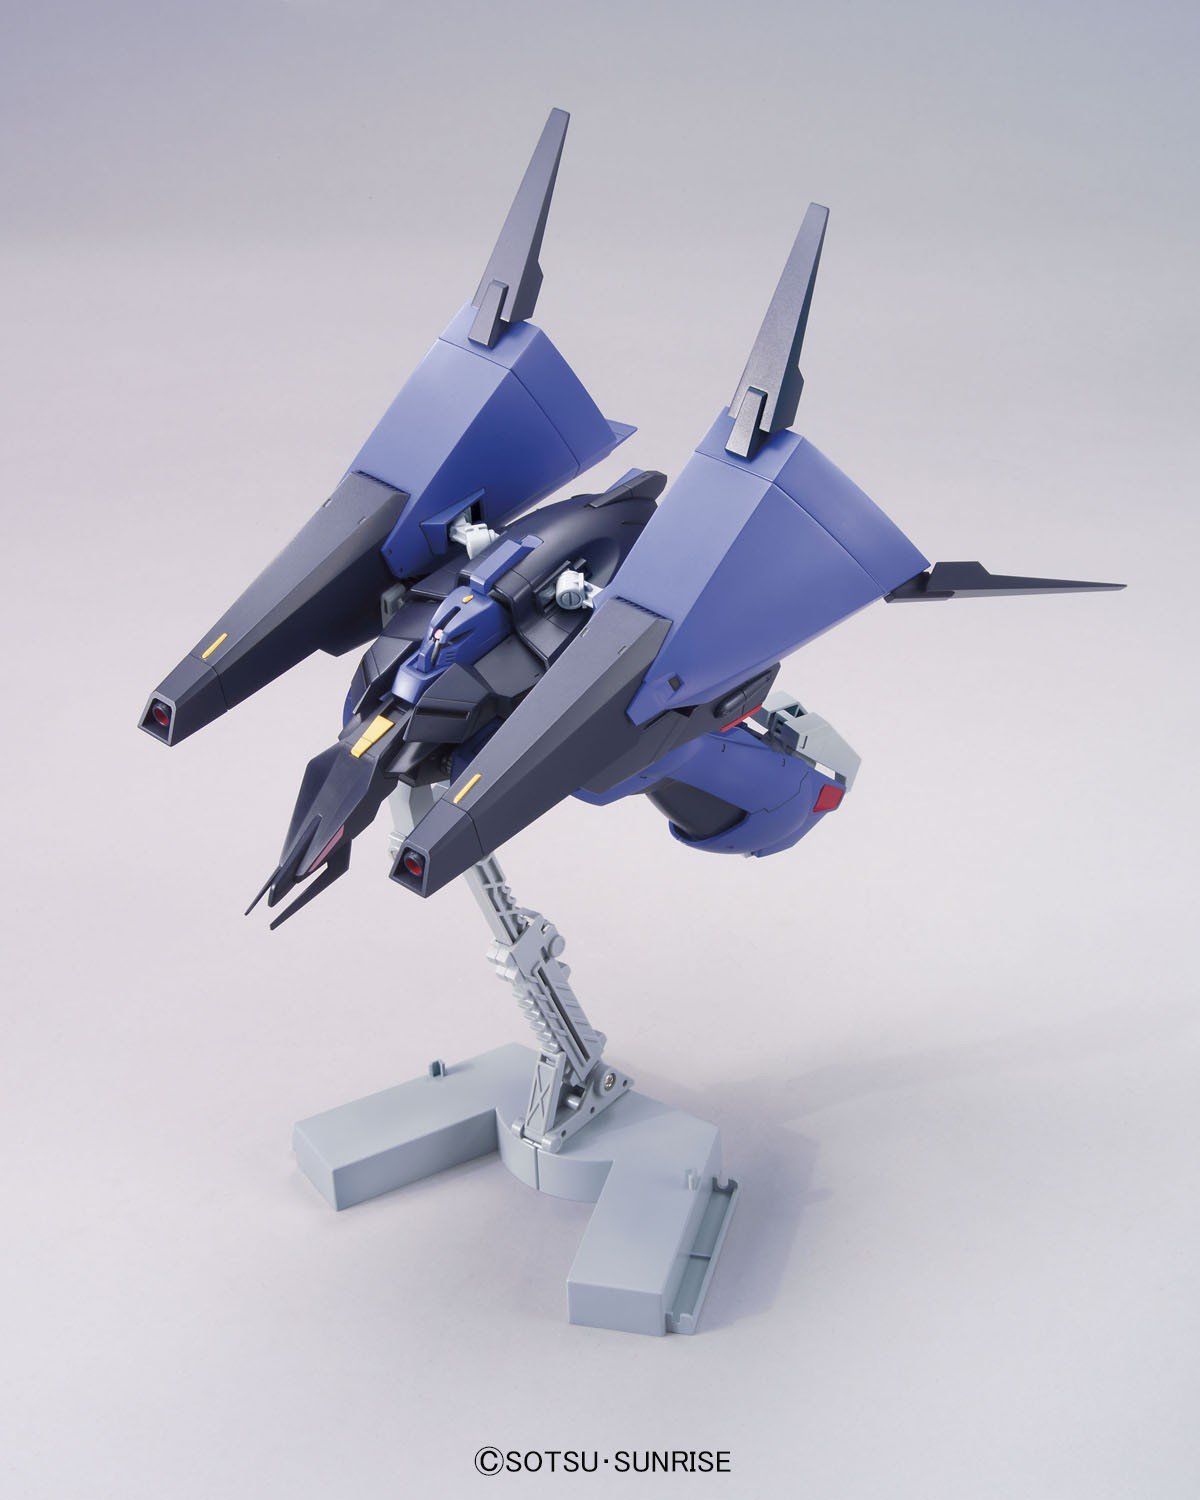 HGUC 1/144 Messala - Mobile Suit Zeta Gundam | Glacier Hobbies